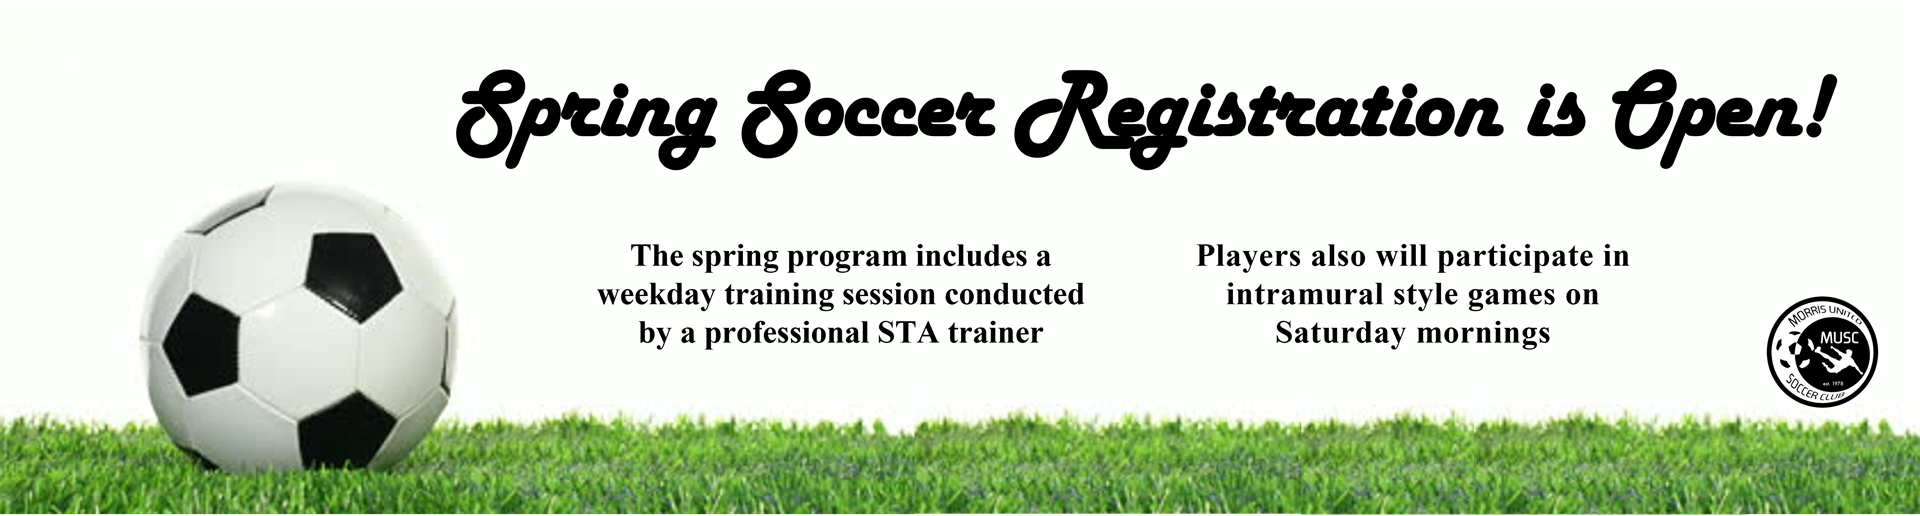 Spring Recreation Soccer Registration